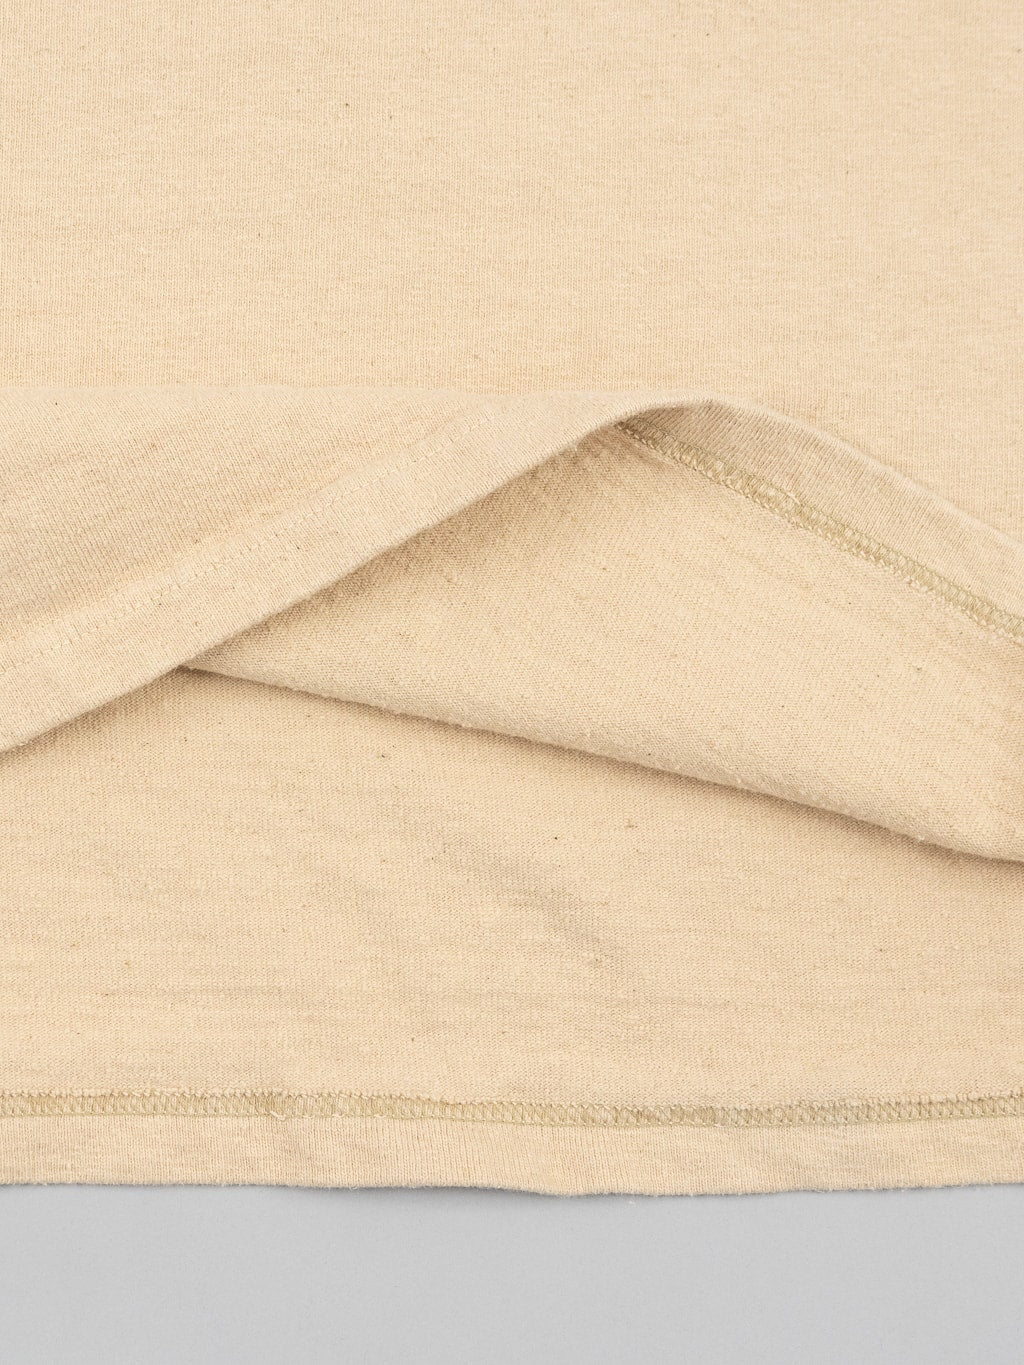 samurai jeans japanese cotton slub tshirt henley kuri interior